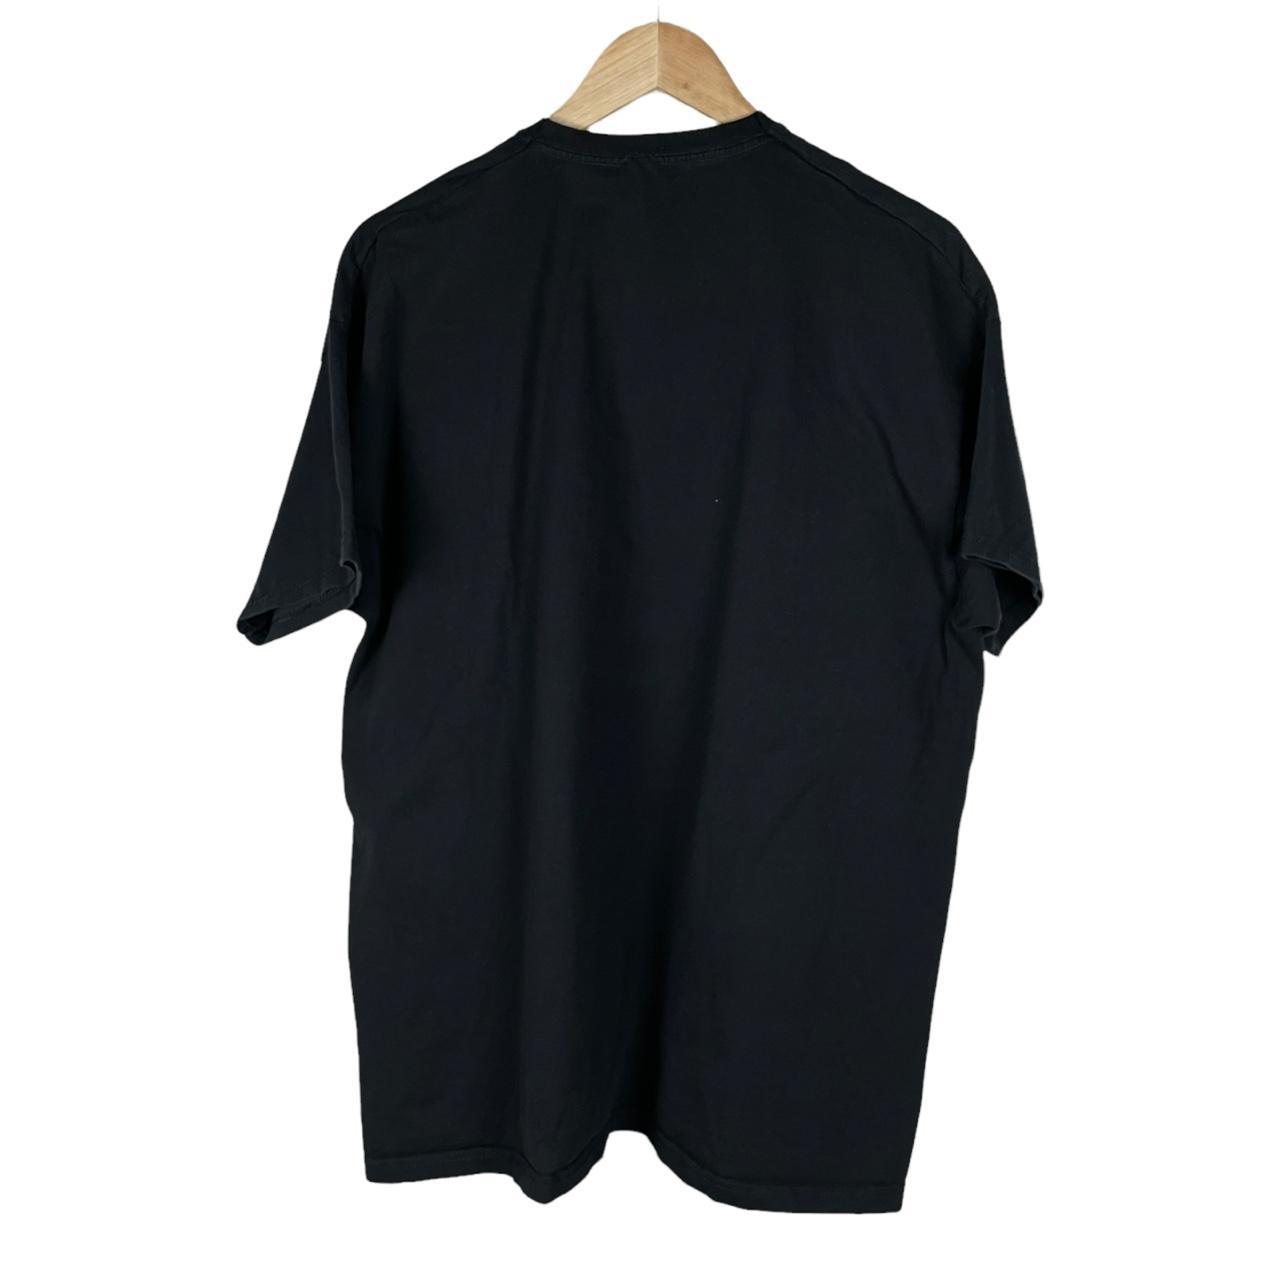 Vintage sex position Black T-Shirt 10 Very Good... - Depop